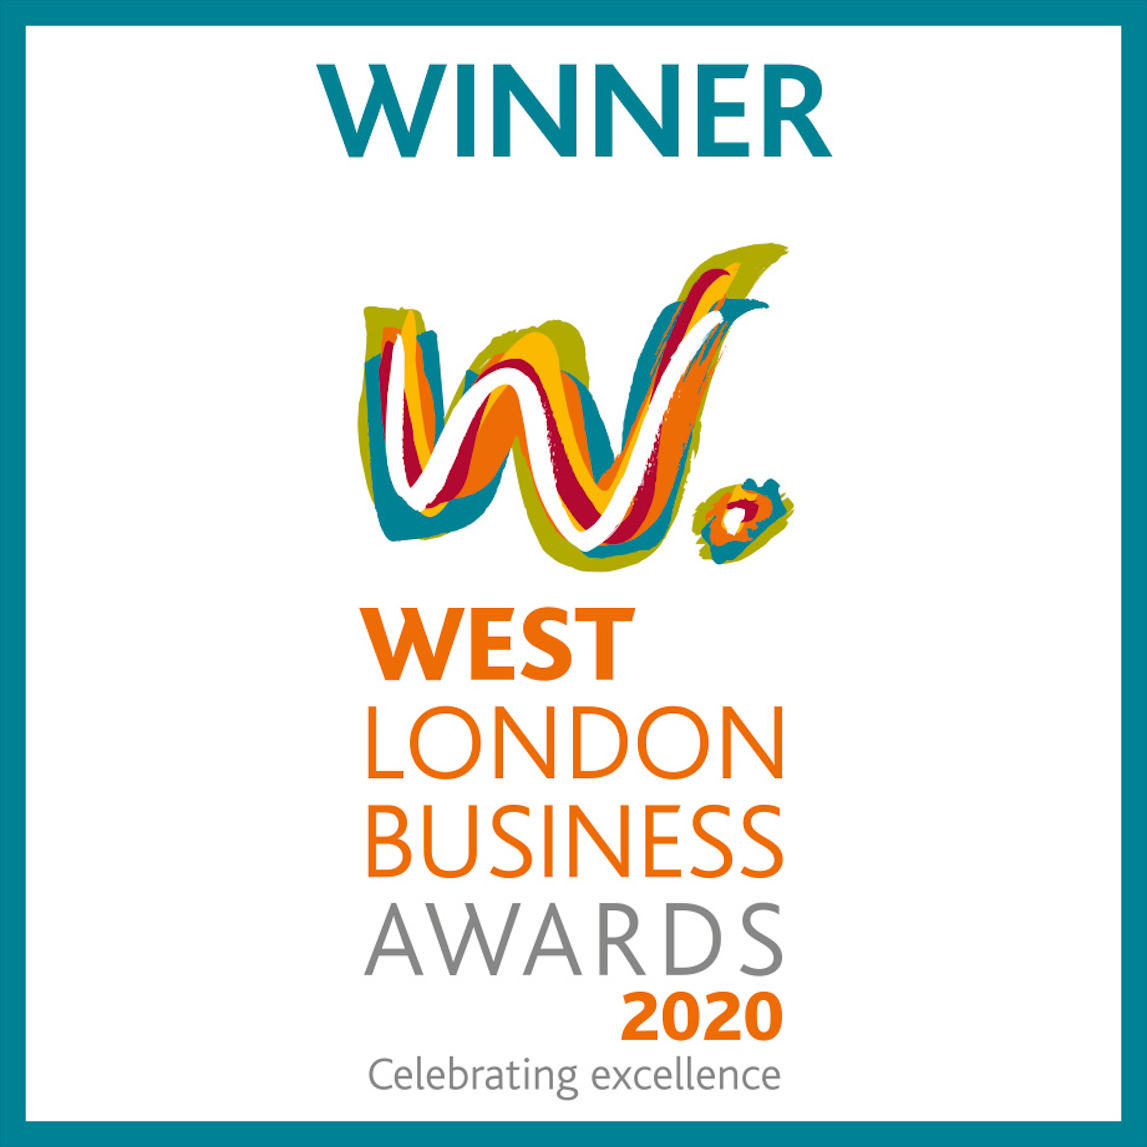 West London Business Awards 2020 Winner